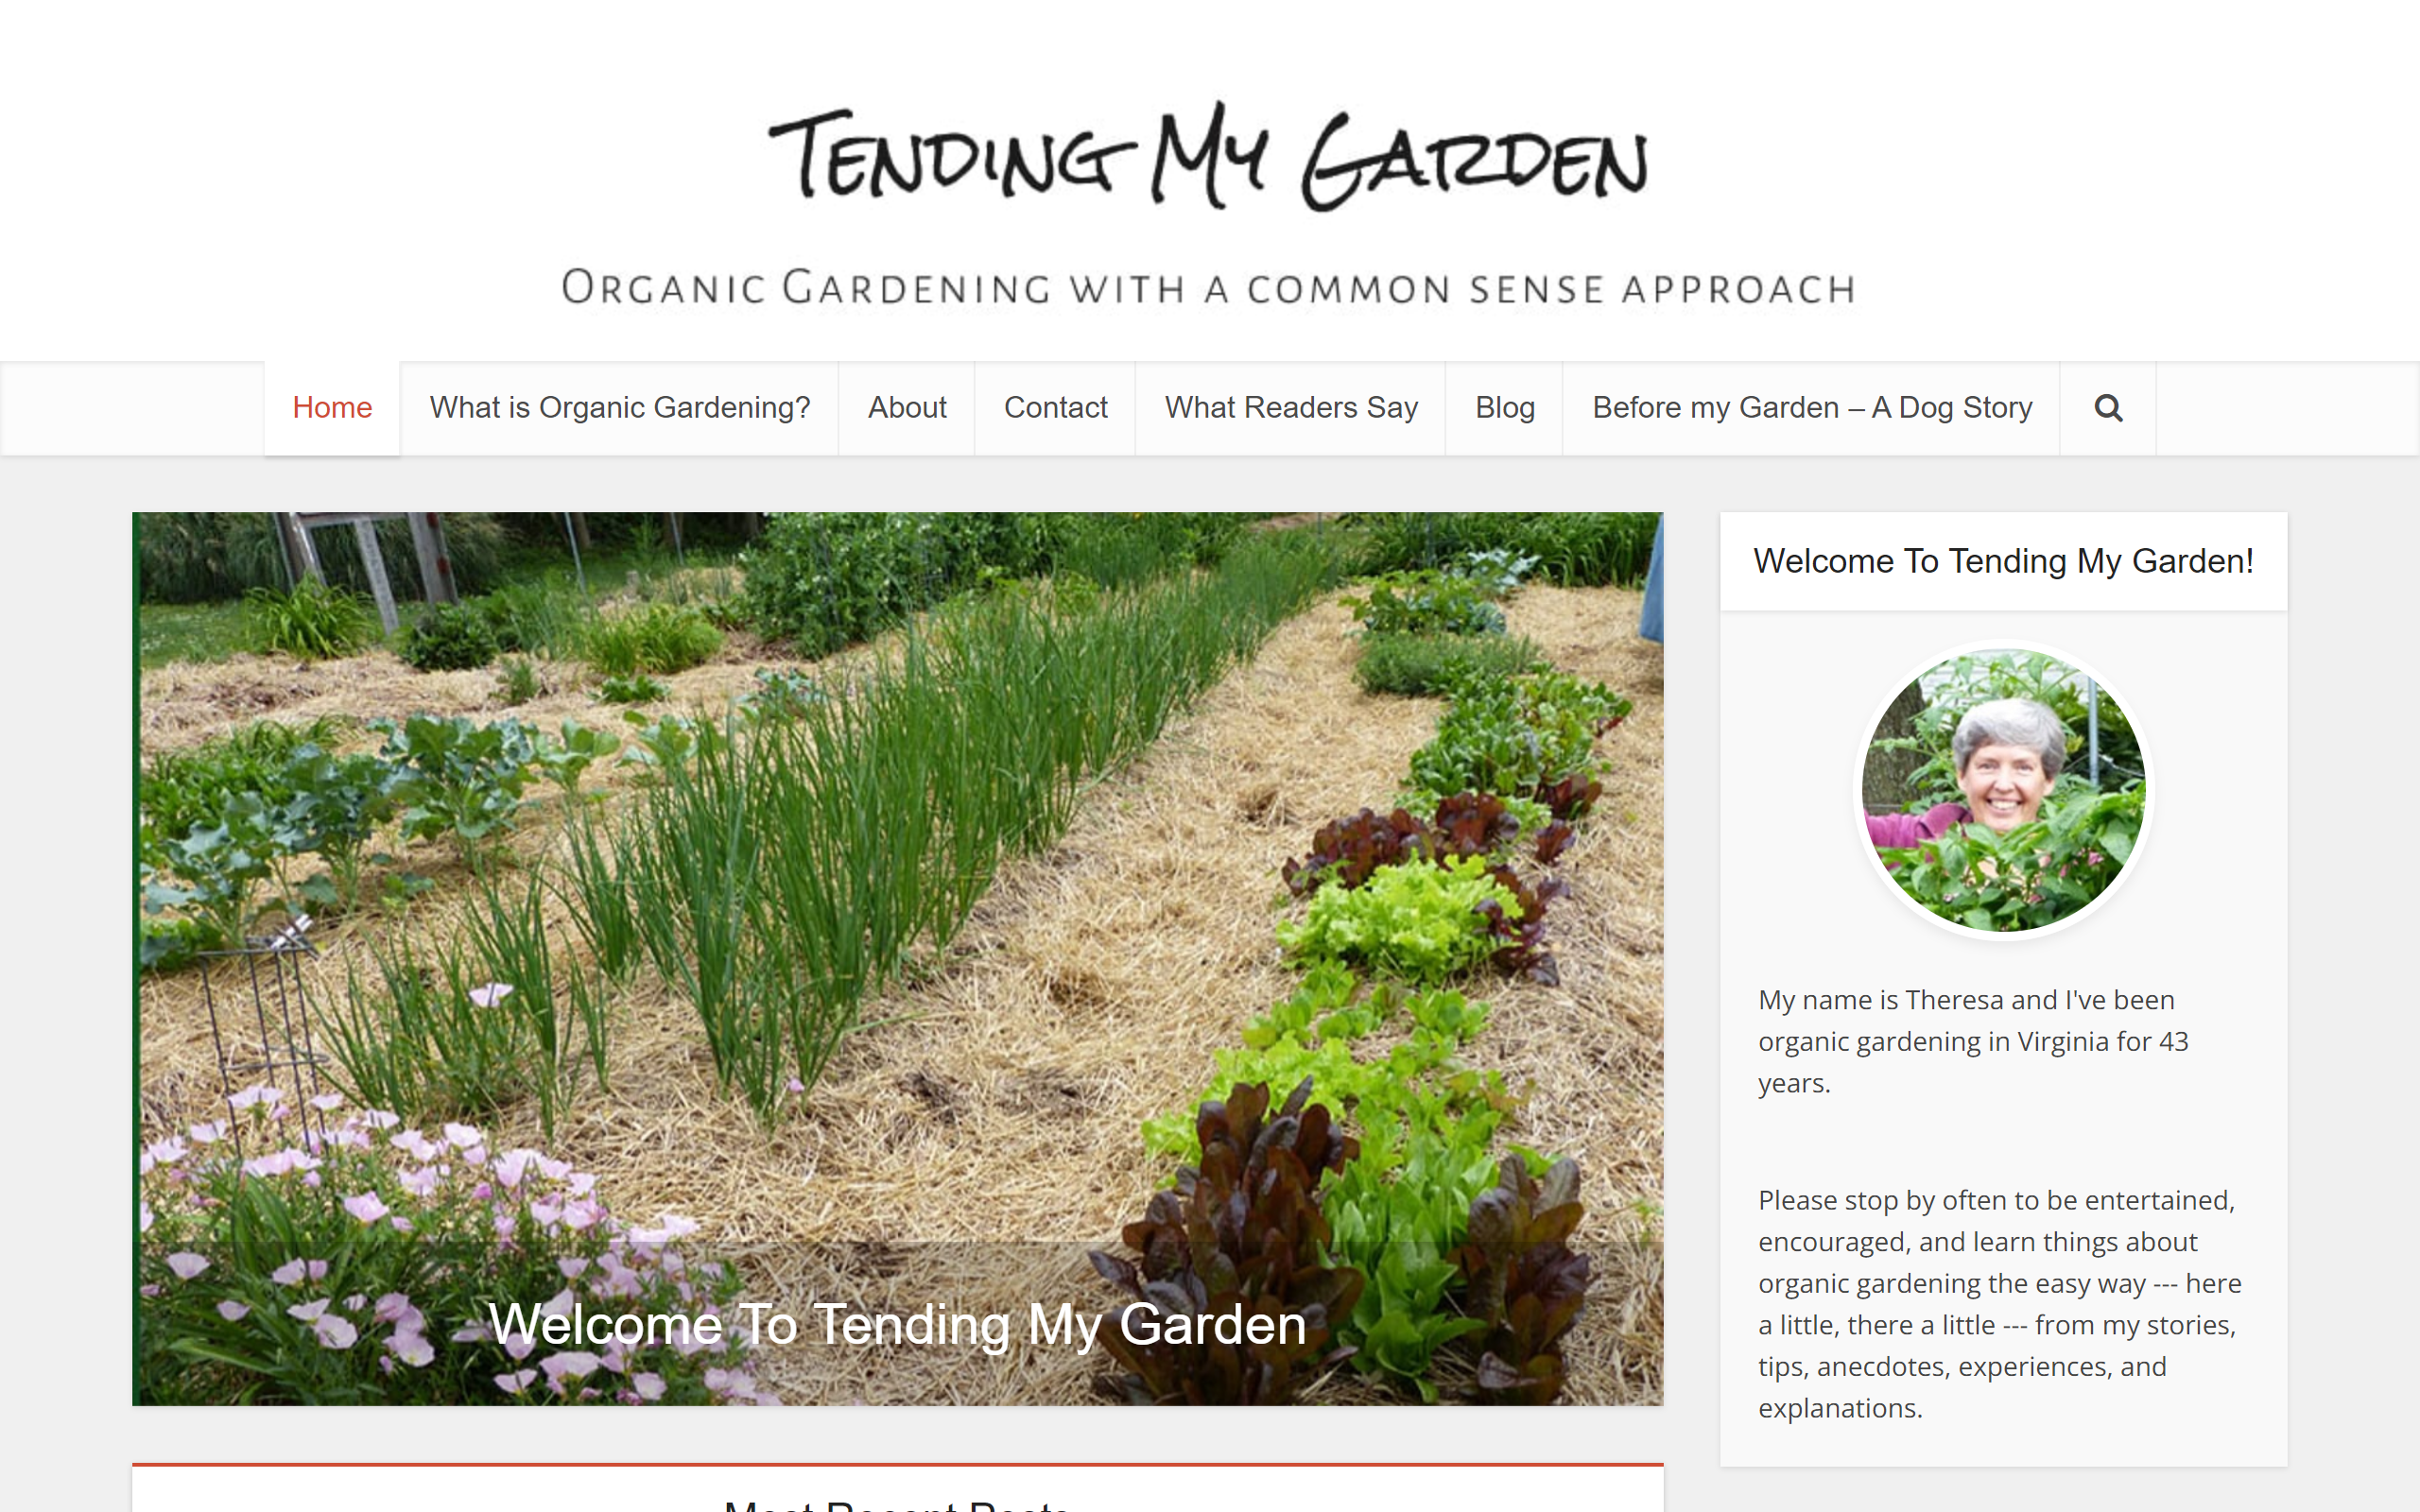 Tending My Garden gardening blog